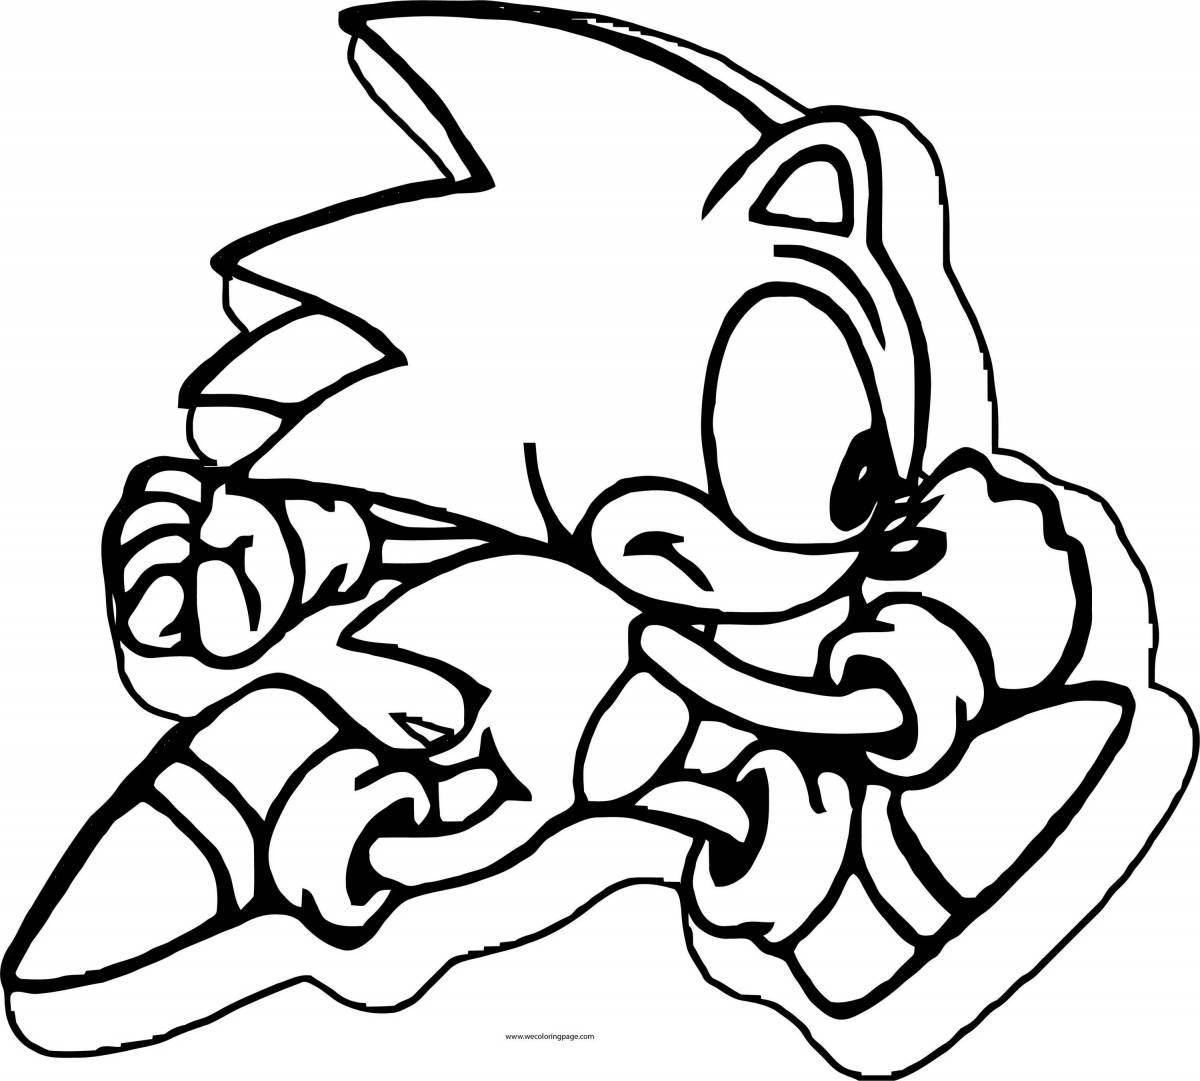 Sonic 3 explosive coloring